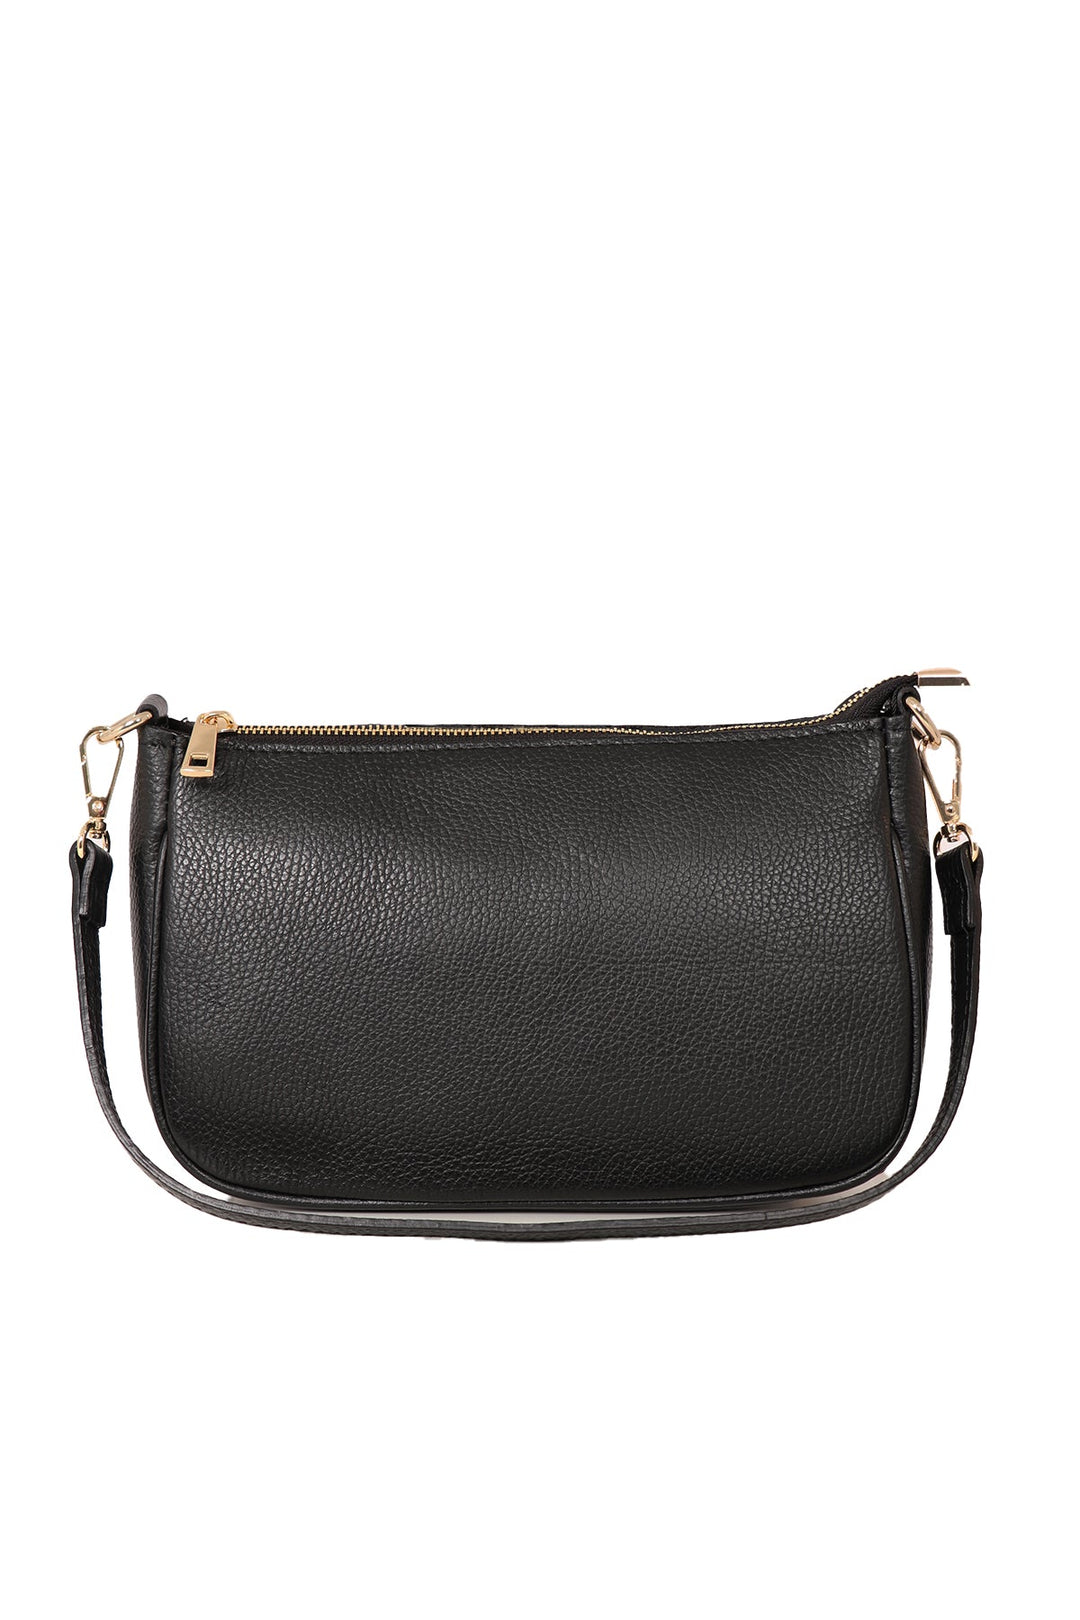 Black Genuine Italian Leather Baguette Bag